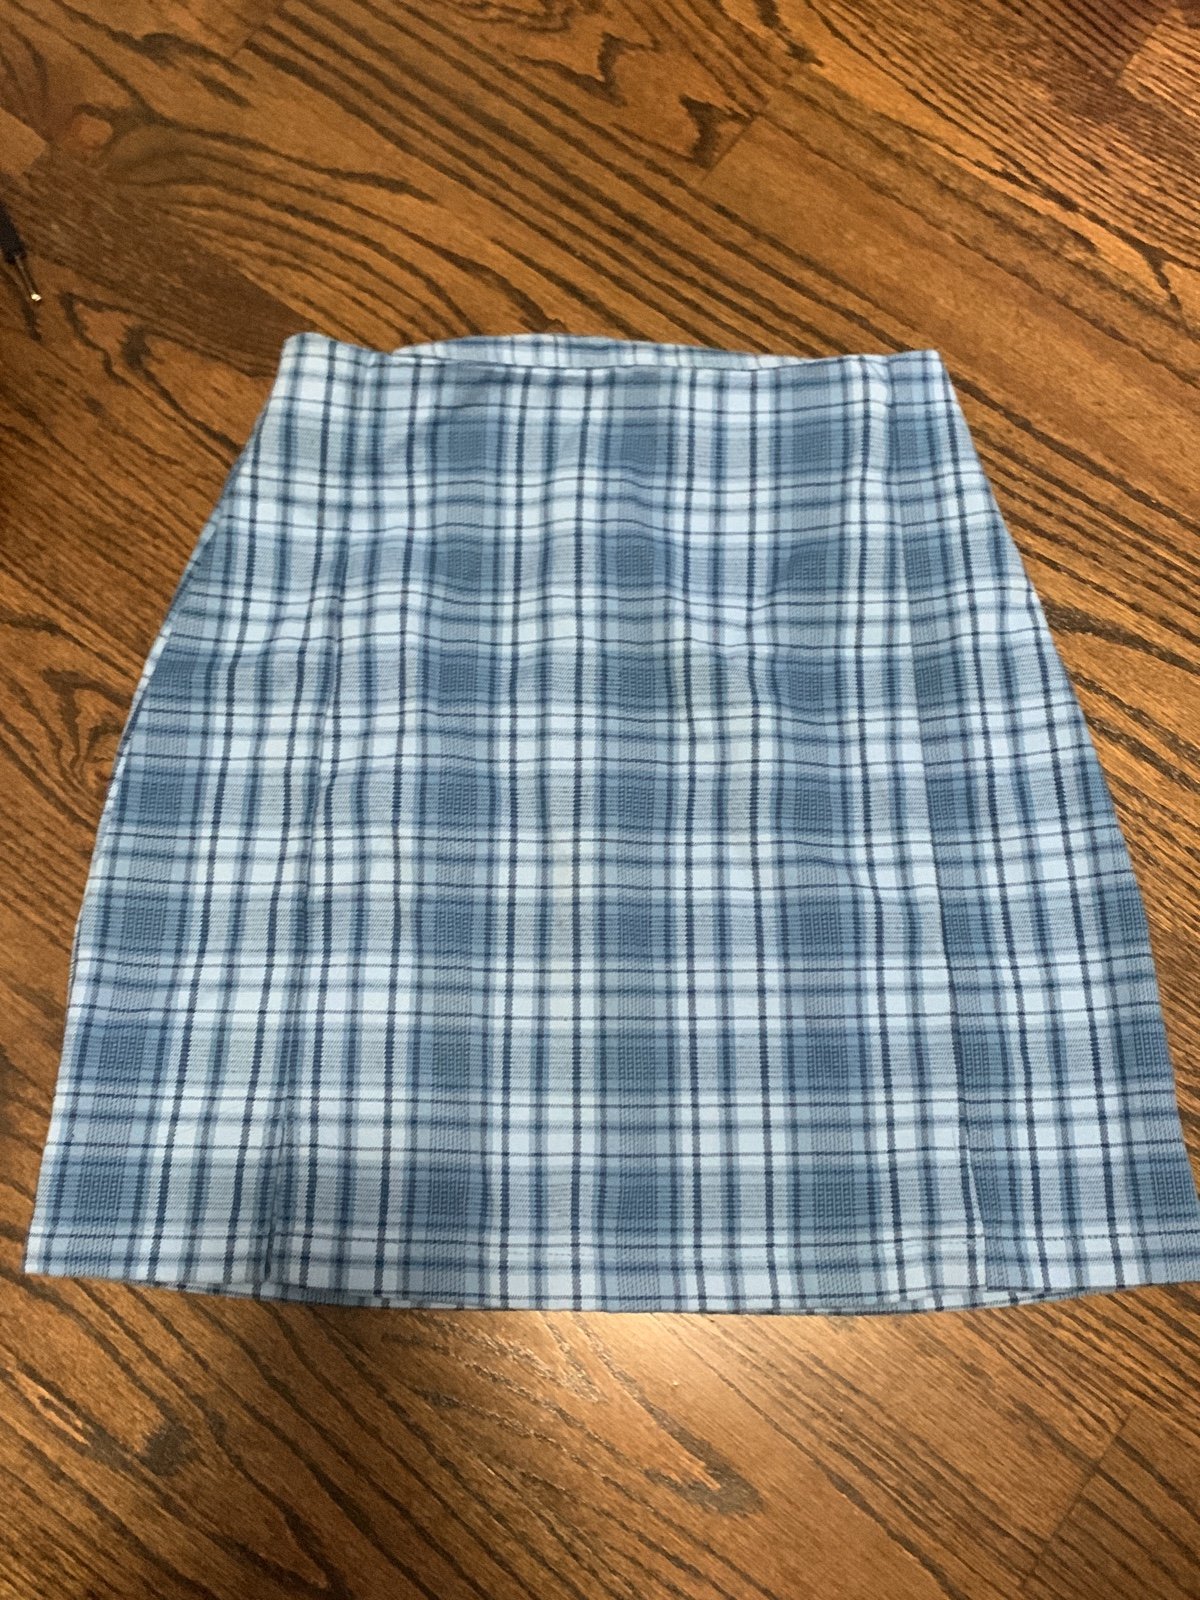 Elegant Brandy Melville Plaid Skirt I6RbjNdMw High Quai